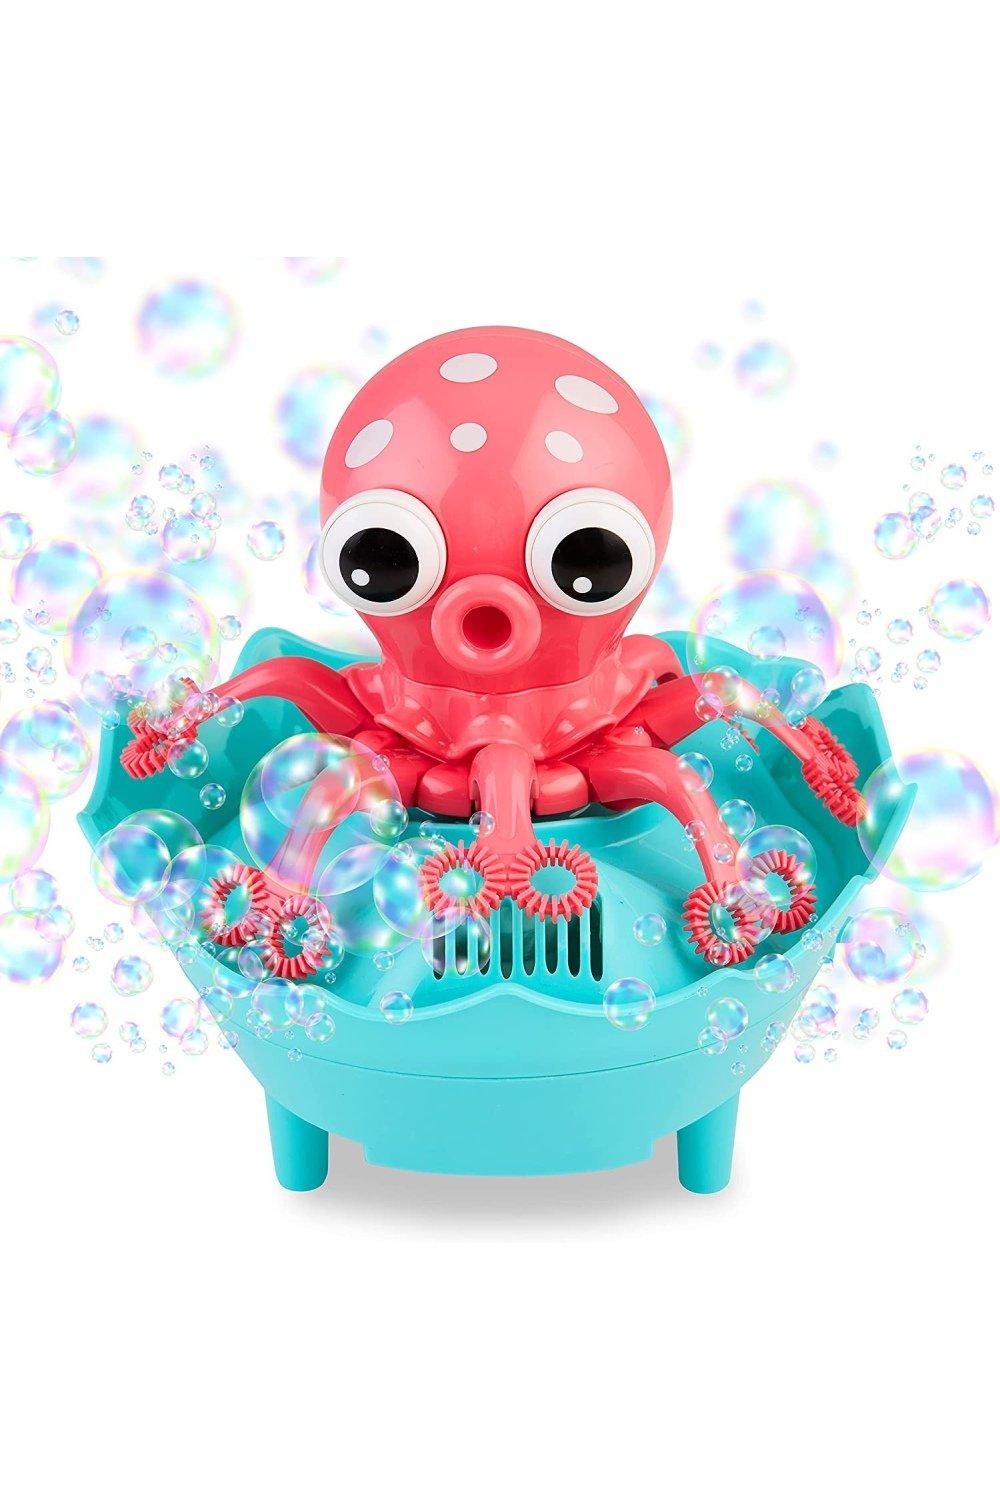 Octopus Bubble Machine Toy